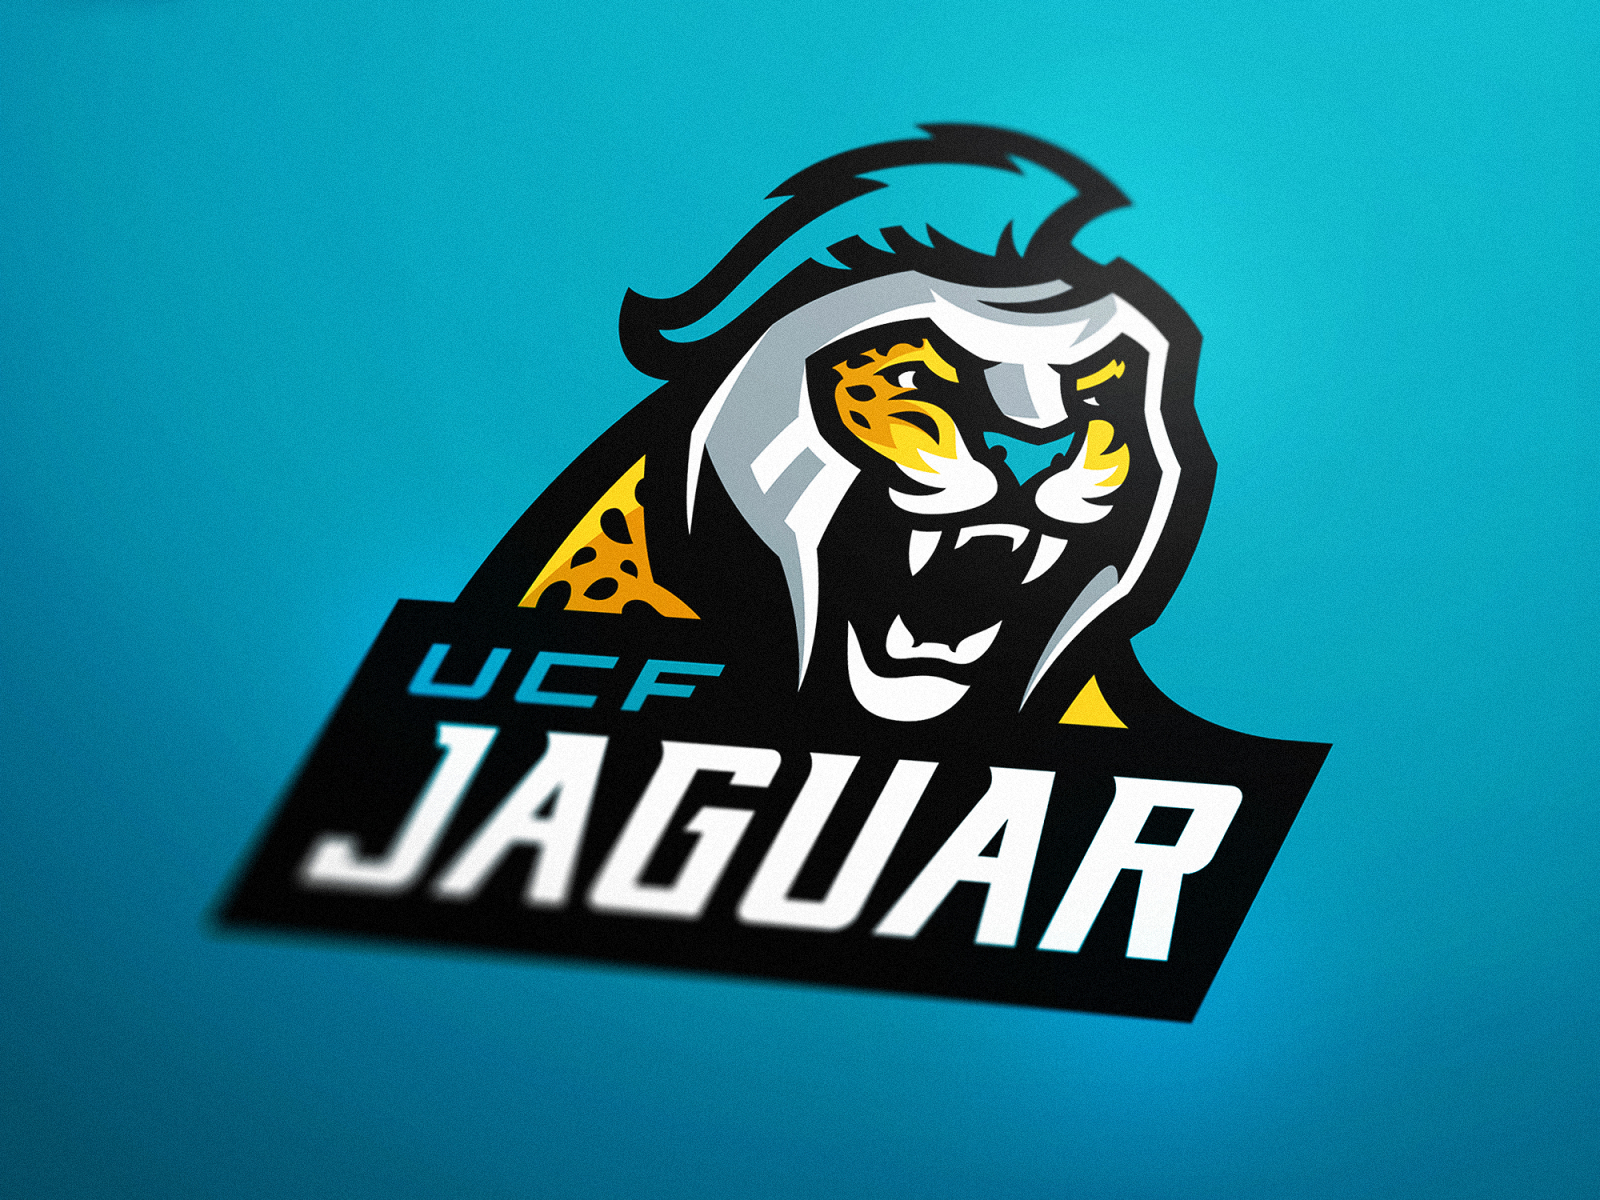 jaguar mascot logo